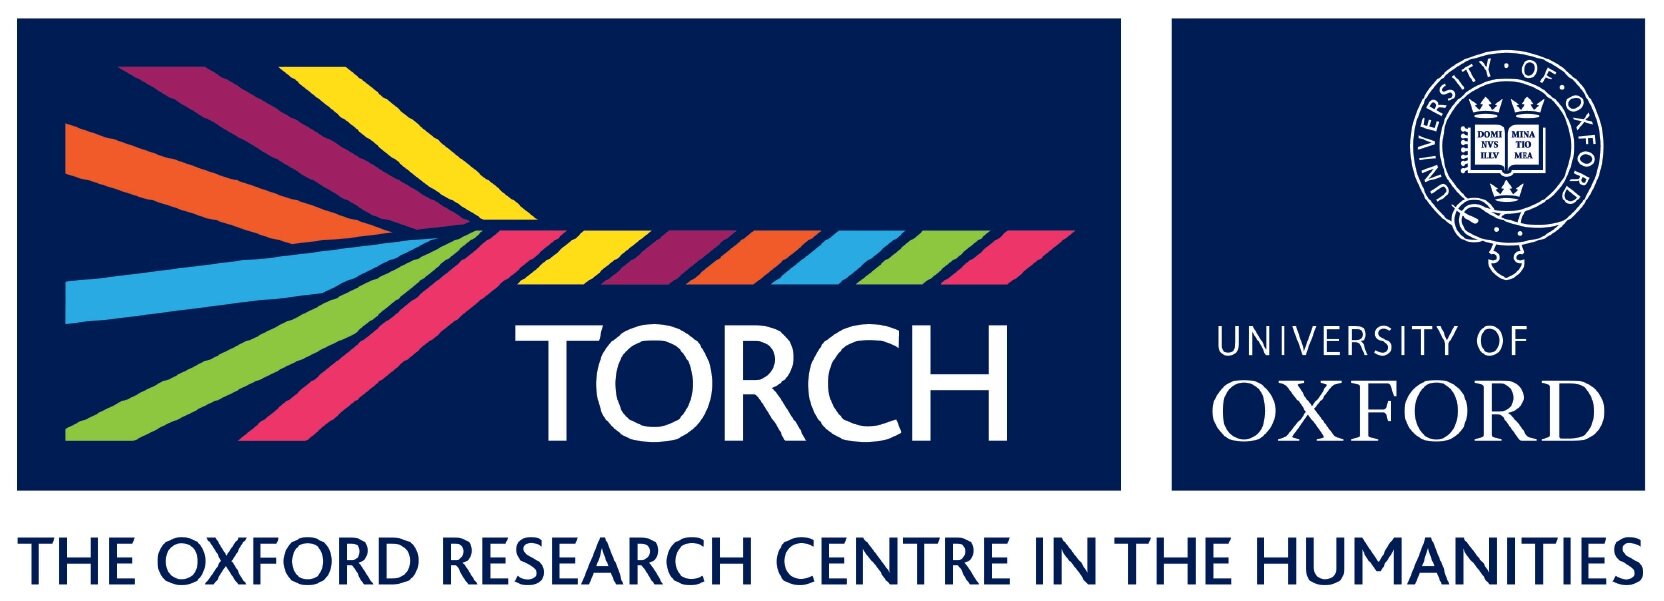 TORCH logo.jpg